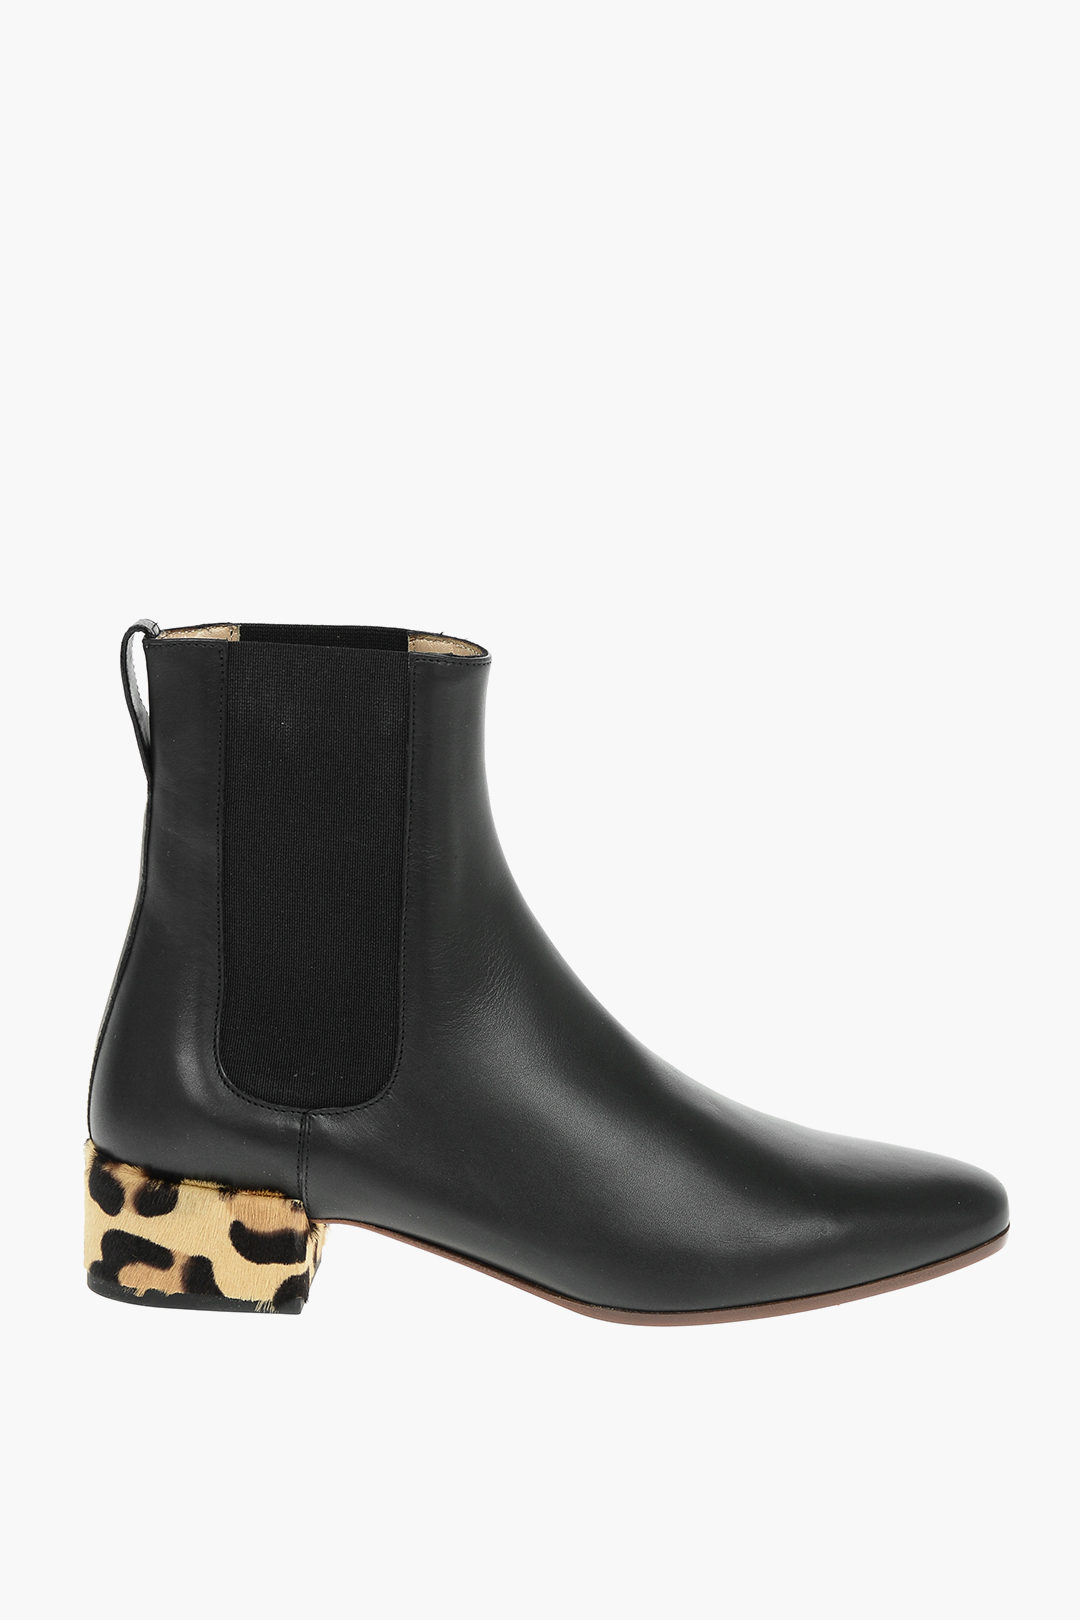 Francesco Russo 4 cm Leopard Print Heel Leather Chelsea Boots - Glamood Outlet